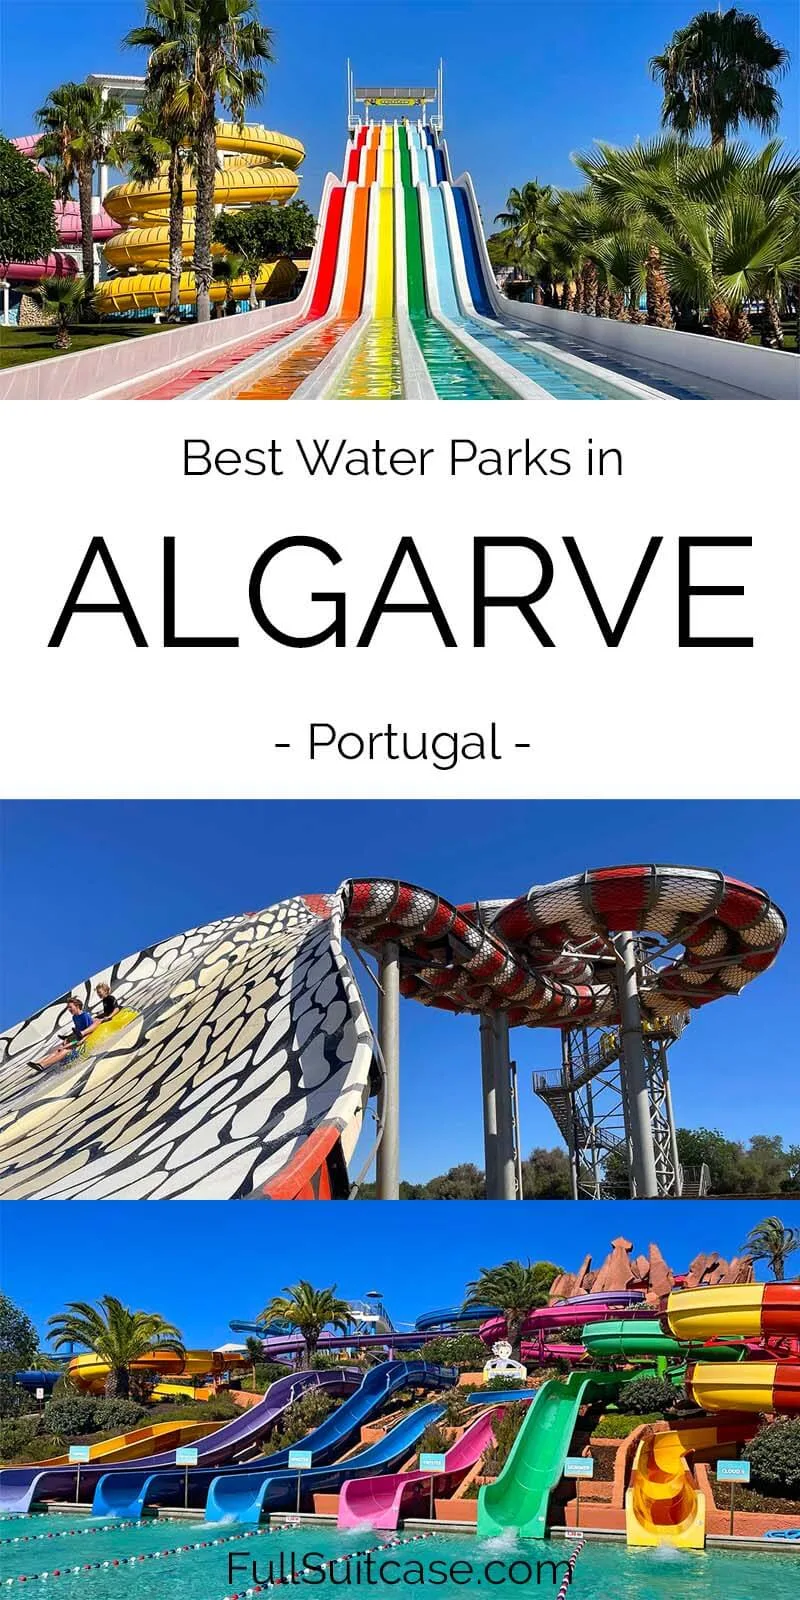 Algarve water parks near Albufeira, Lagos, Vilamoura, and Faro in Portugal